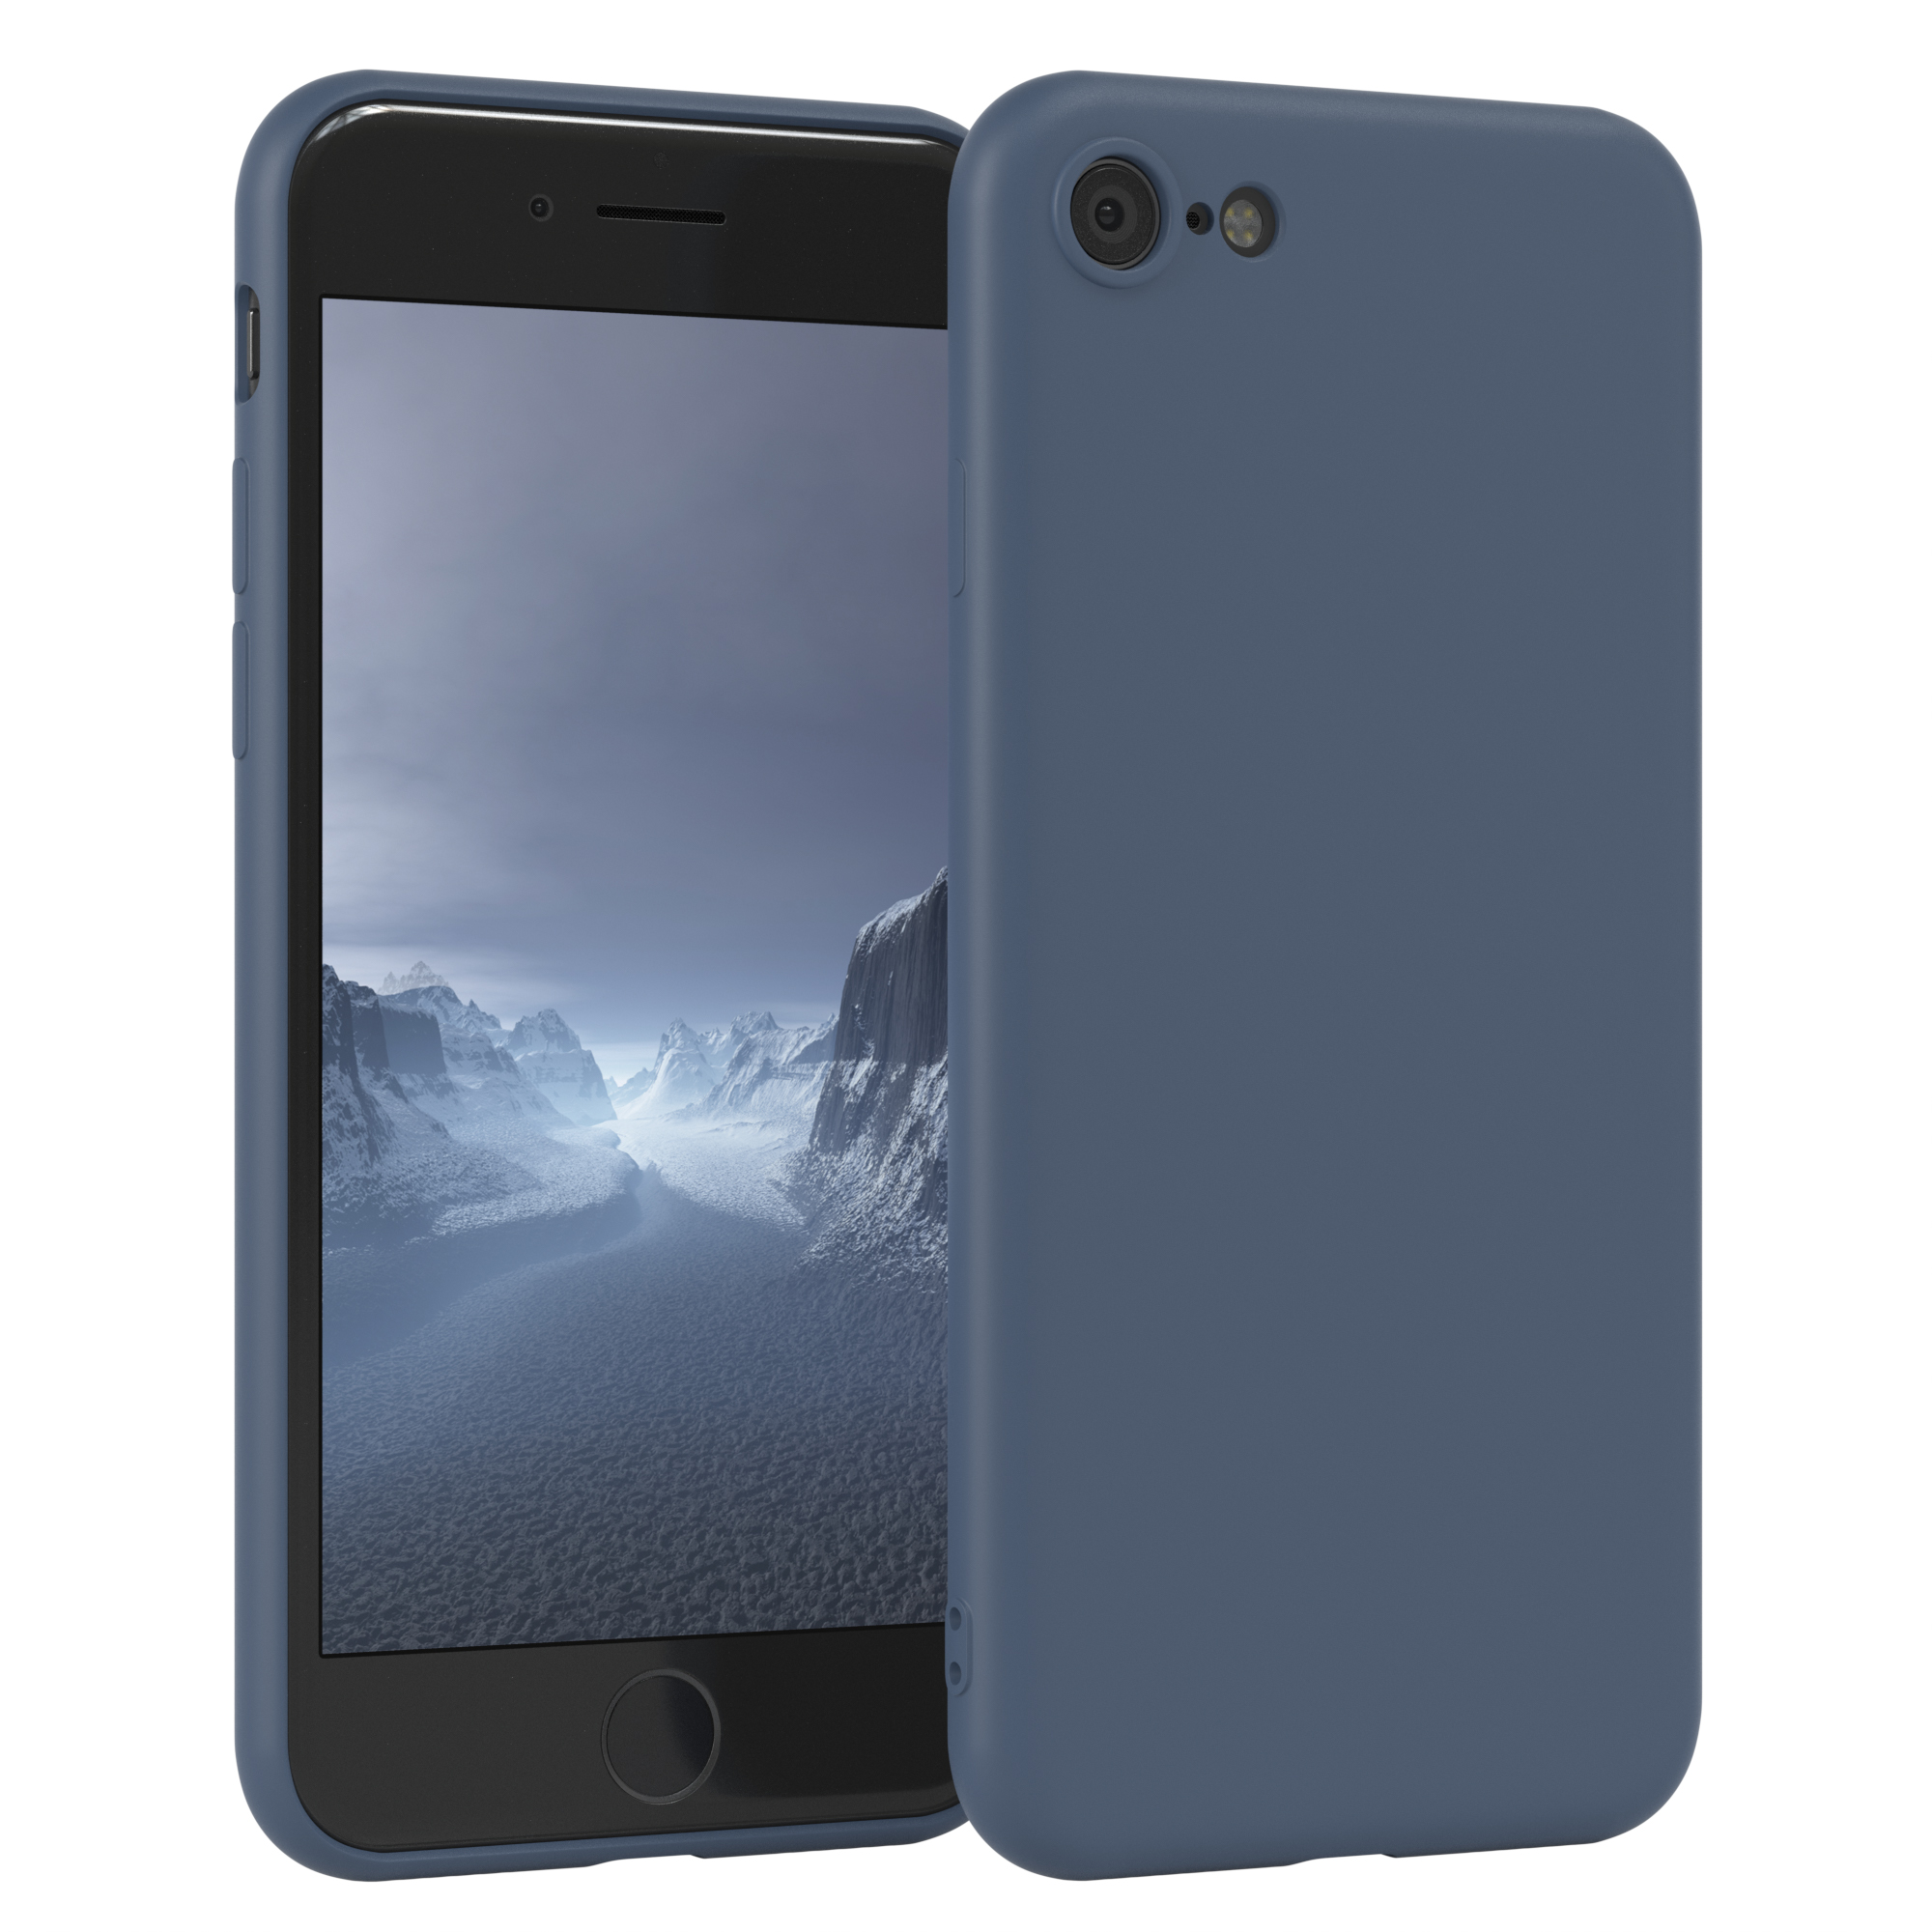 Silikon CASE SE 2022 Handycase Backcover, iPhone 7 / iPhone SE / 2020, TPU Petrol / Matt, EAZY Blau 8, Apple,